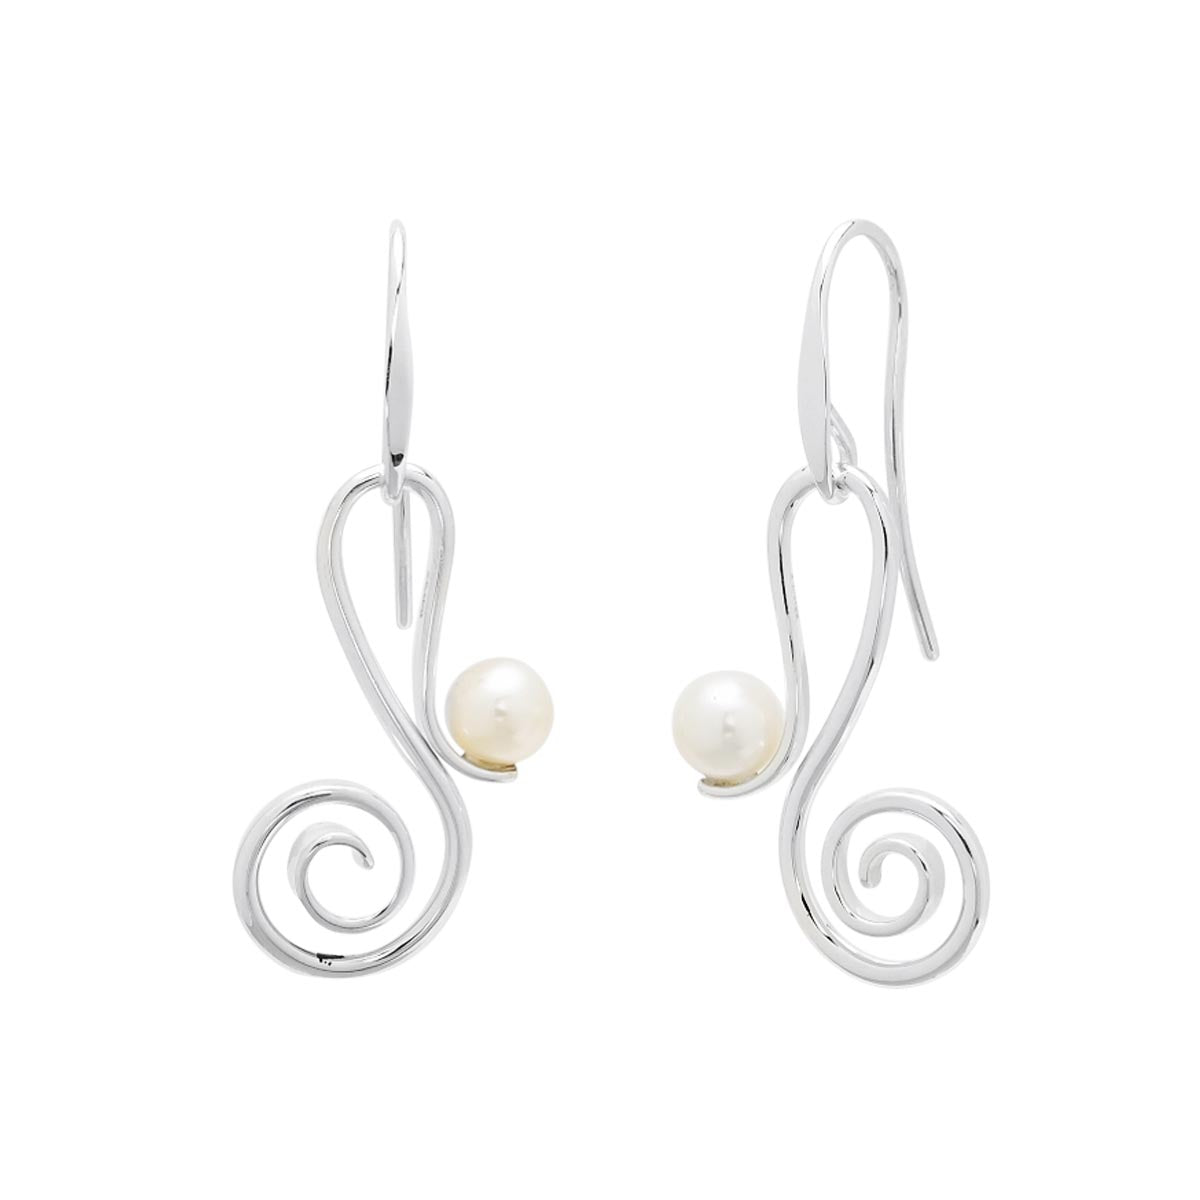 E.L. Designs Cultured Freshwater Pearl Script Earrings in Sterling Silver (5mm pearls)